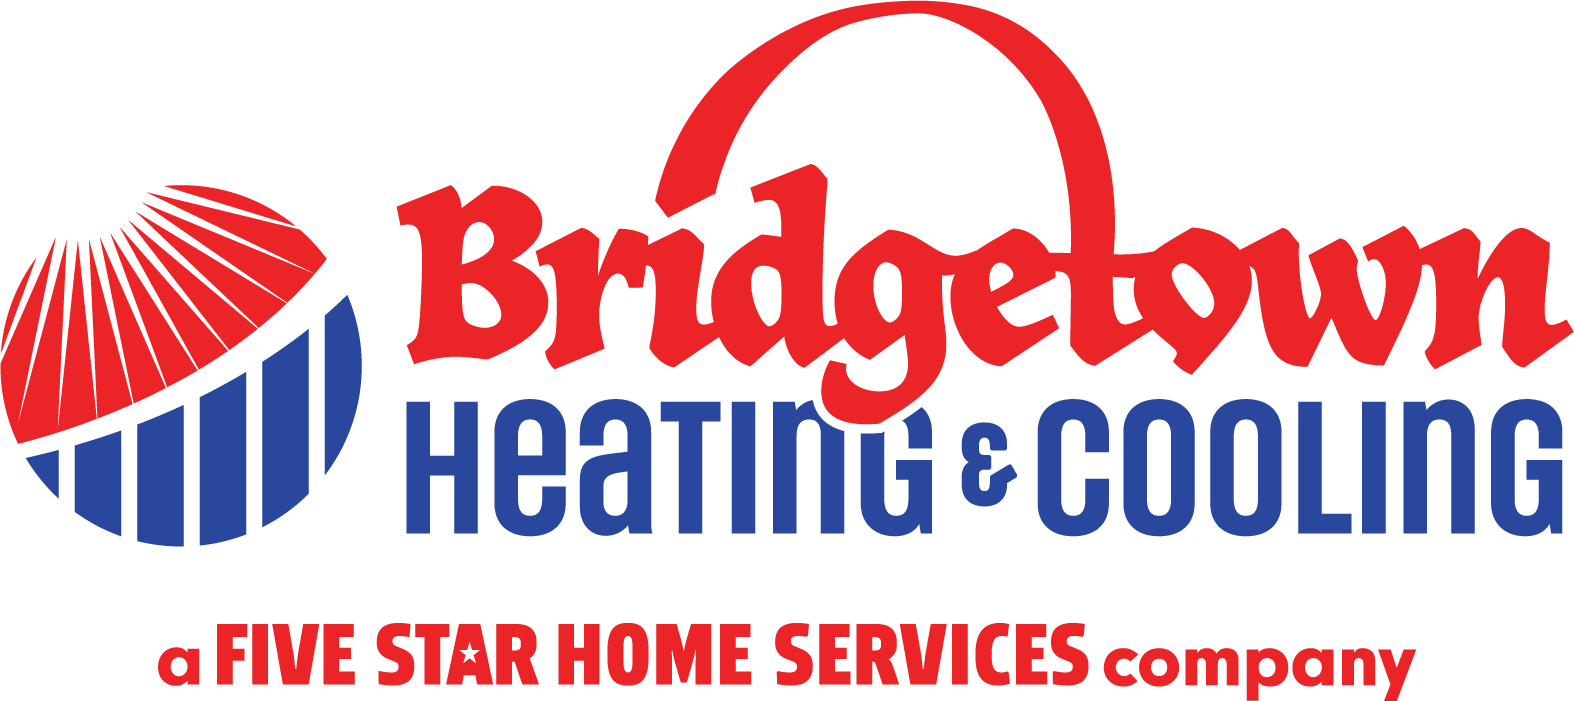 Bridgetown Heating & Cooling